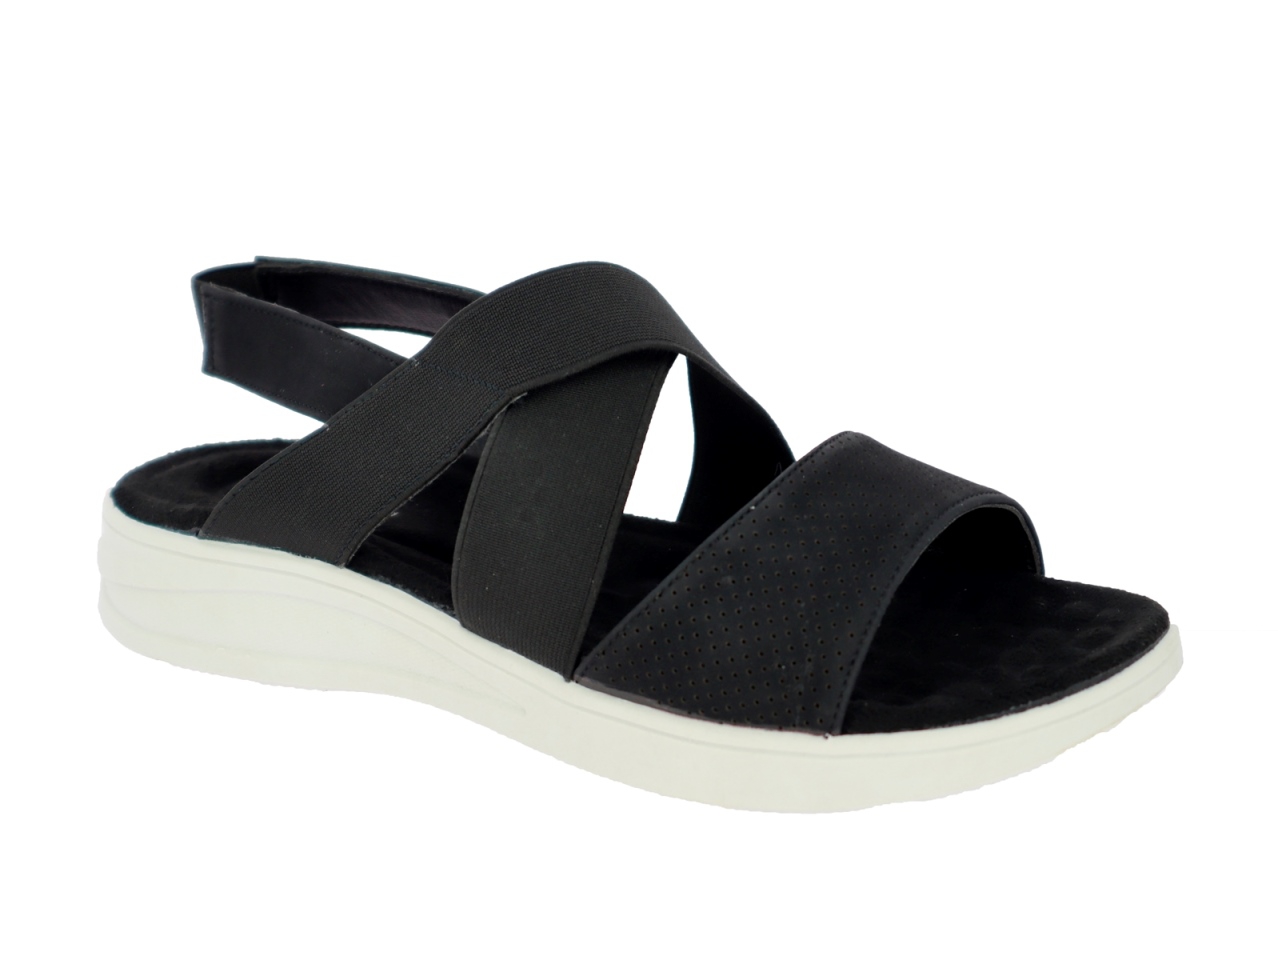 .Da.-Sandalette, PVC-Sohle, 3x Gummizug + Riemen über Spann, Soft-PU, schwarz